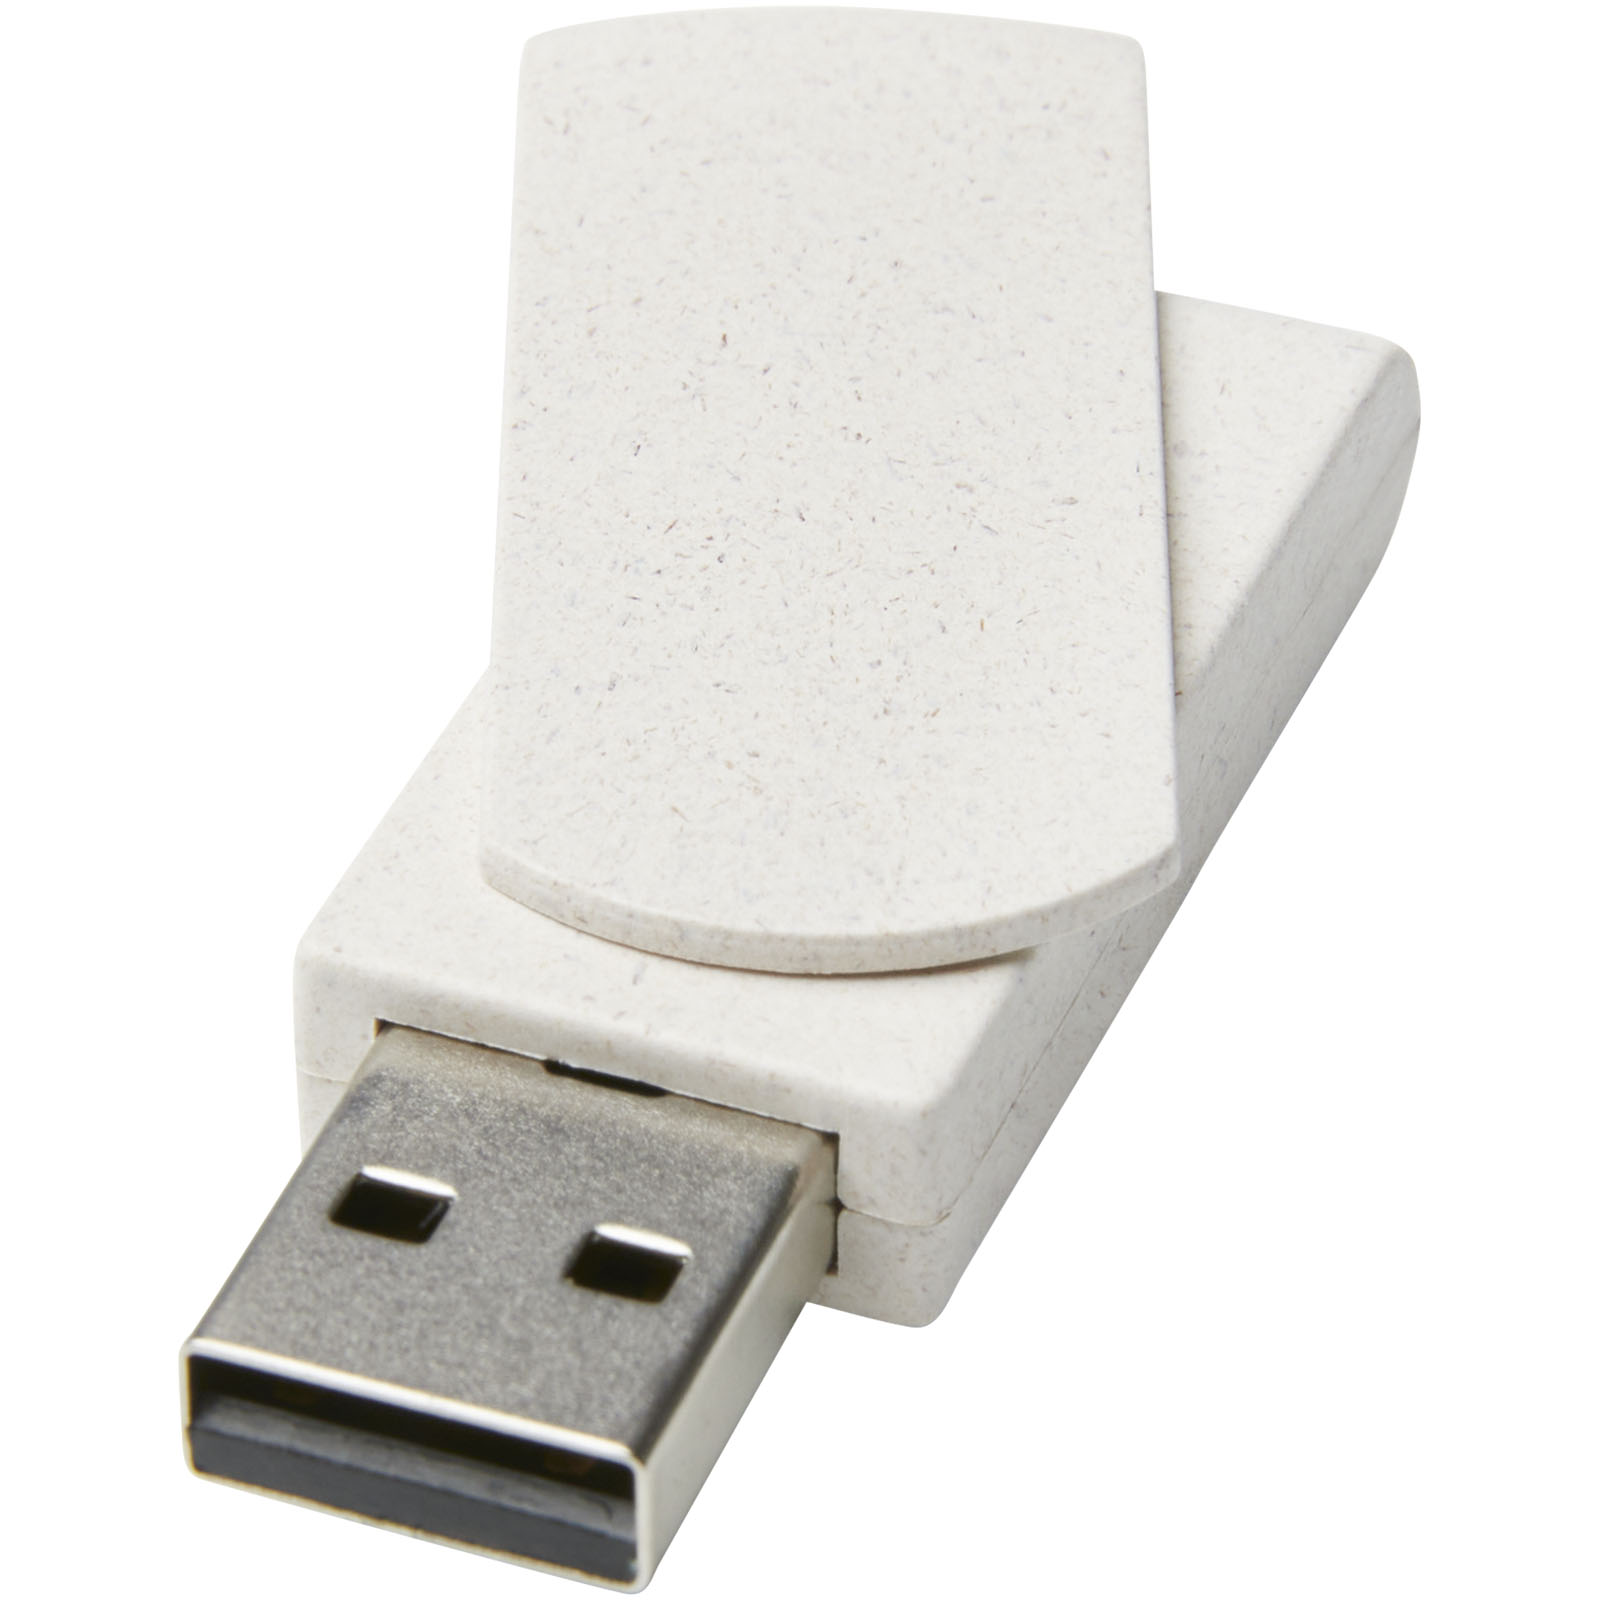 Advertising USB Flash Drives - Rotate 4GB wheat straw USB flash drive - 0